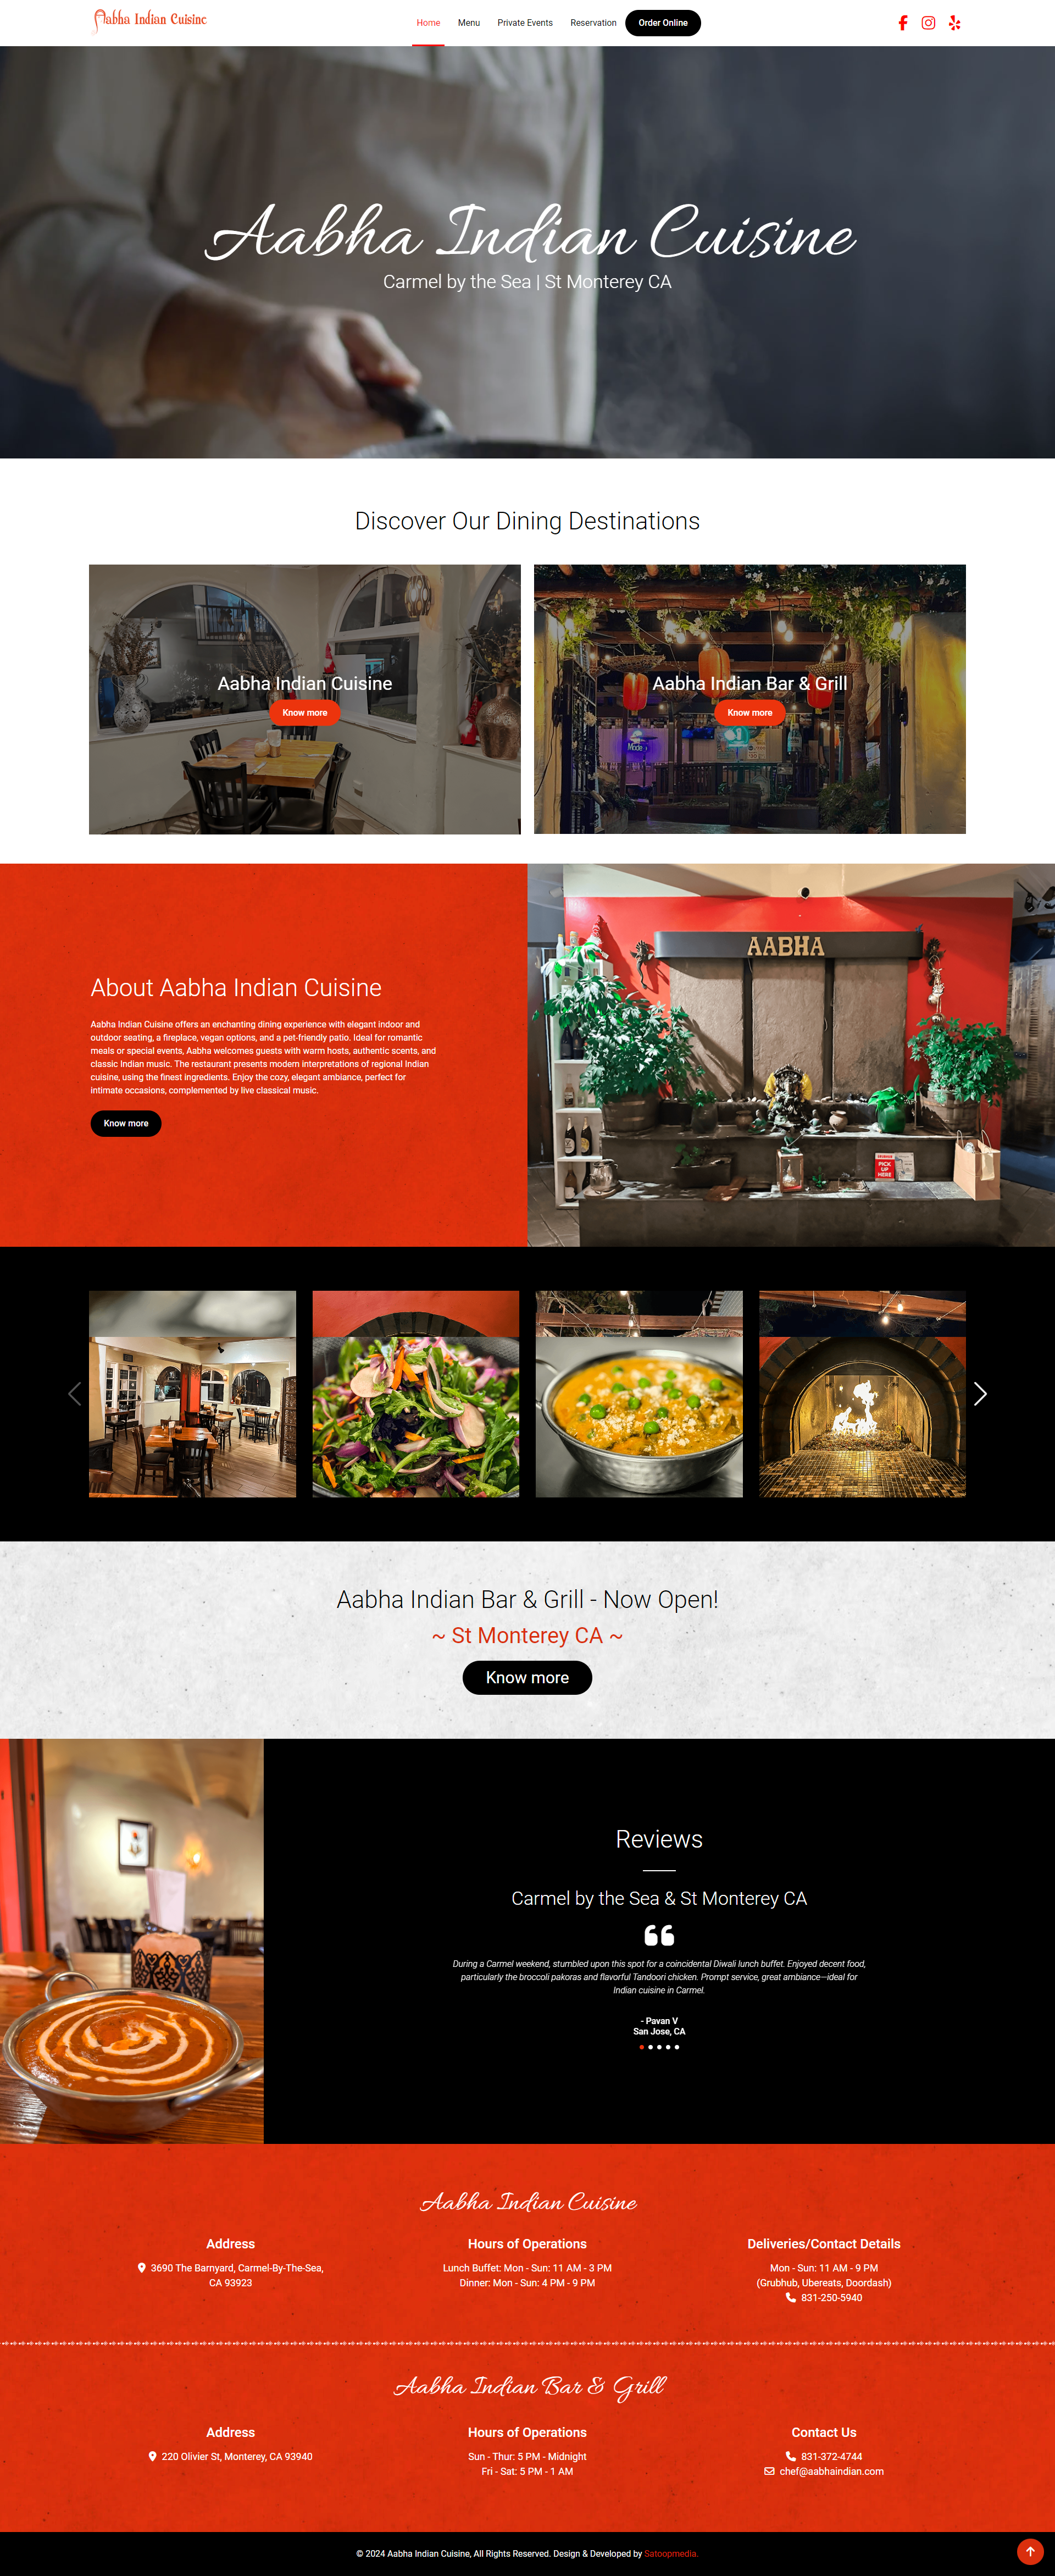 Aabha Indian Cuisine website screenshot